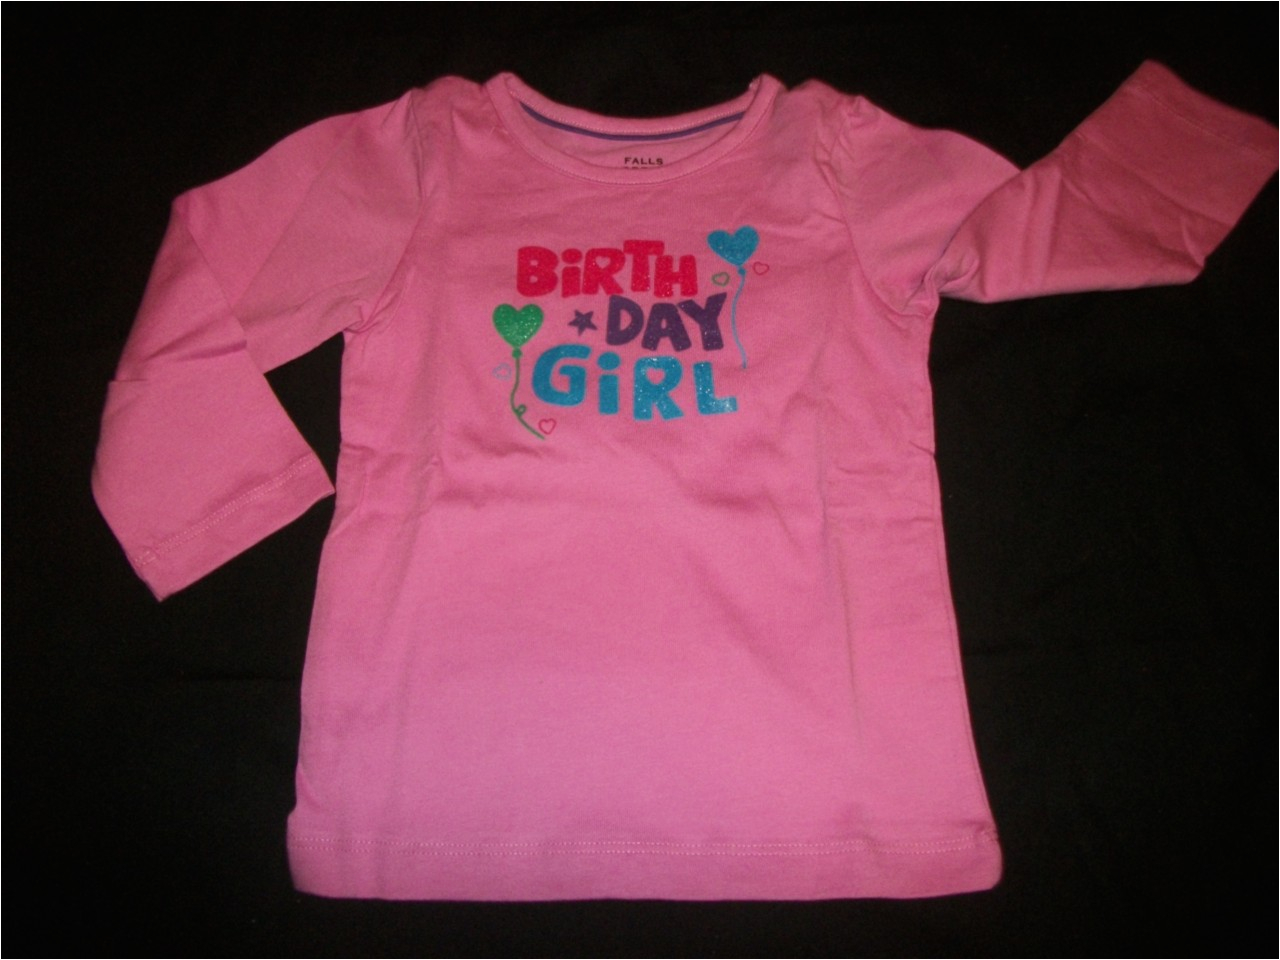 Birthday Girl Shirt 4t New Girls Size 3t 4t 5t Birthday Girl Shirt Ebay